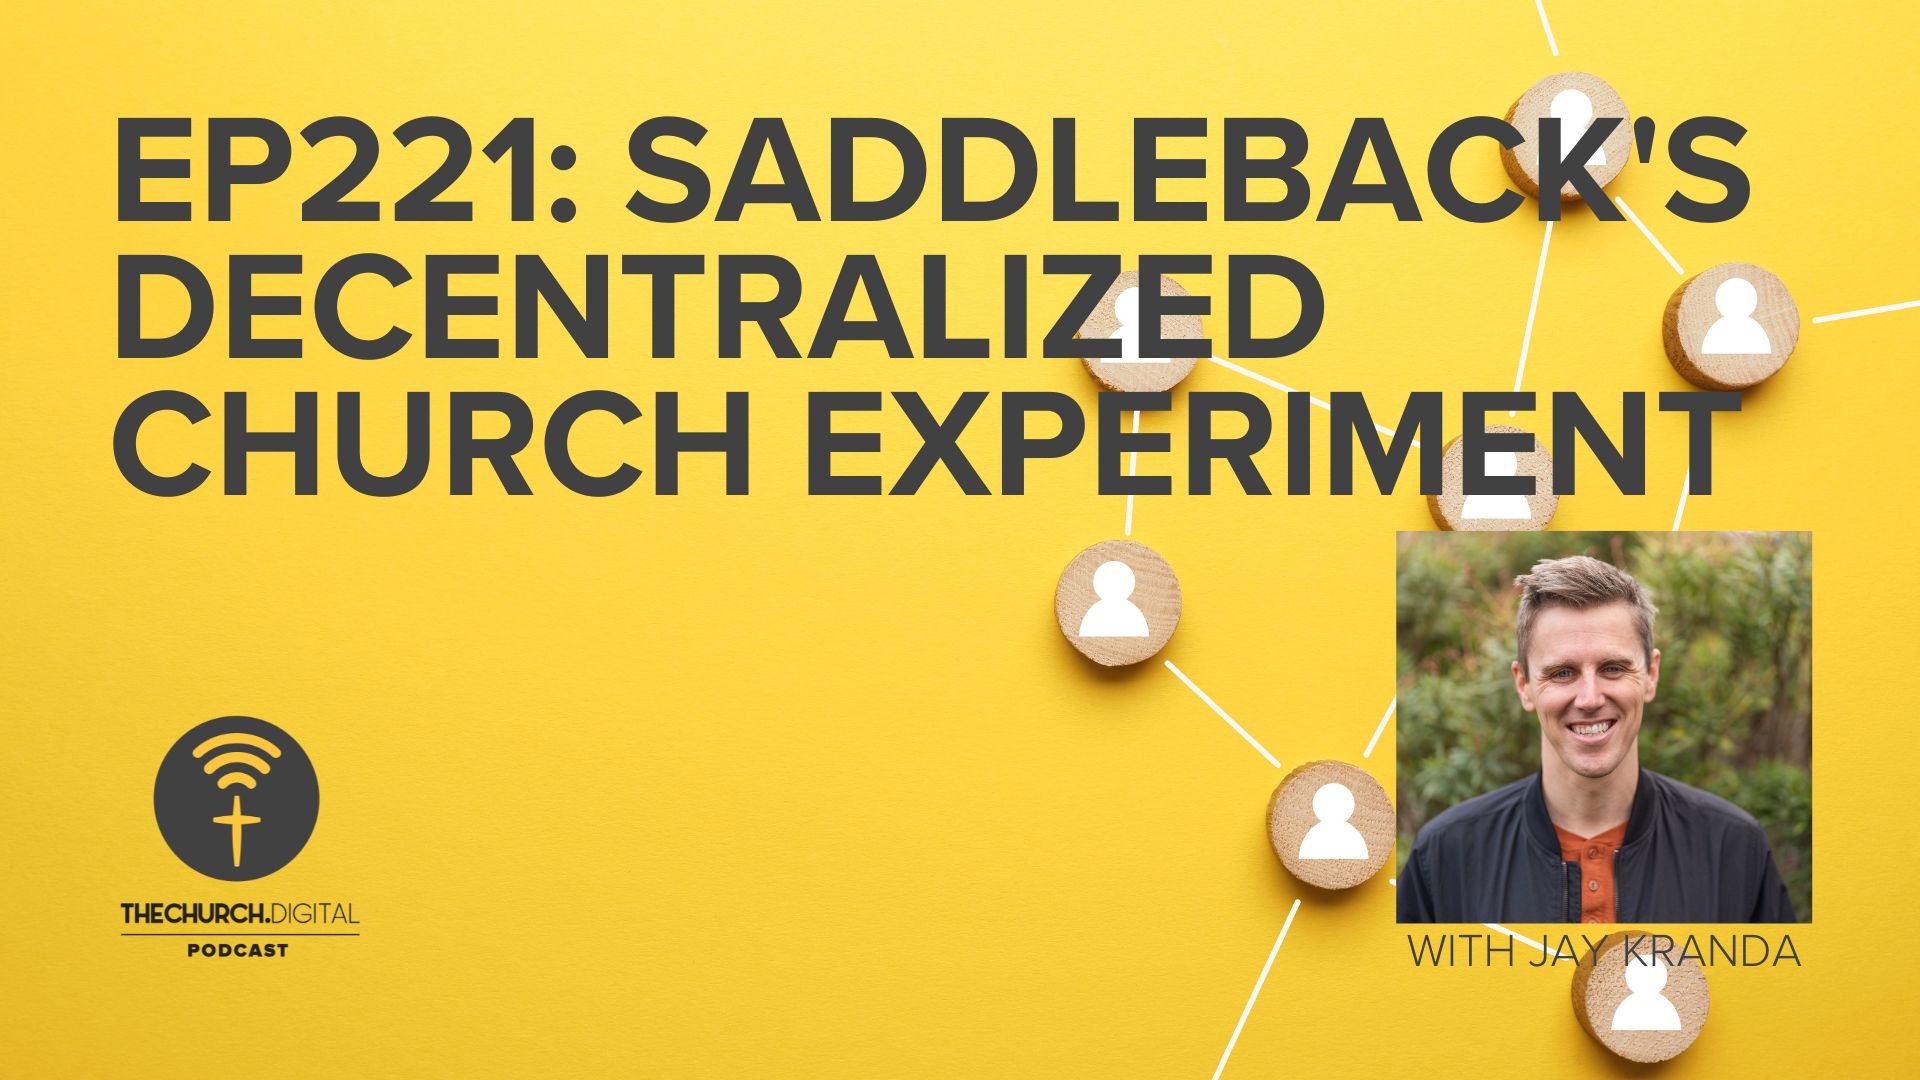 EP221: Jay Kranda & the Decentralized Church